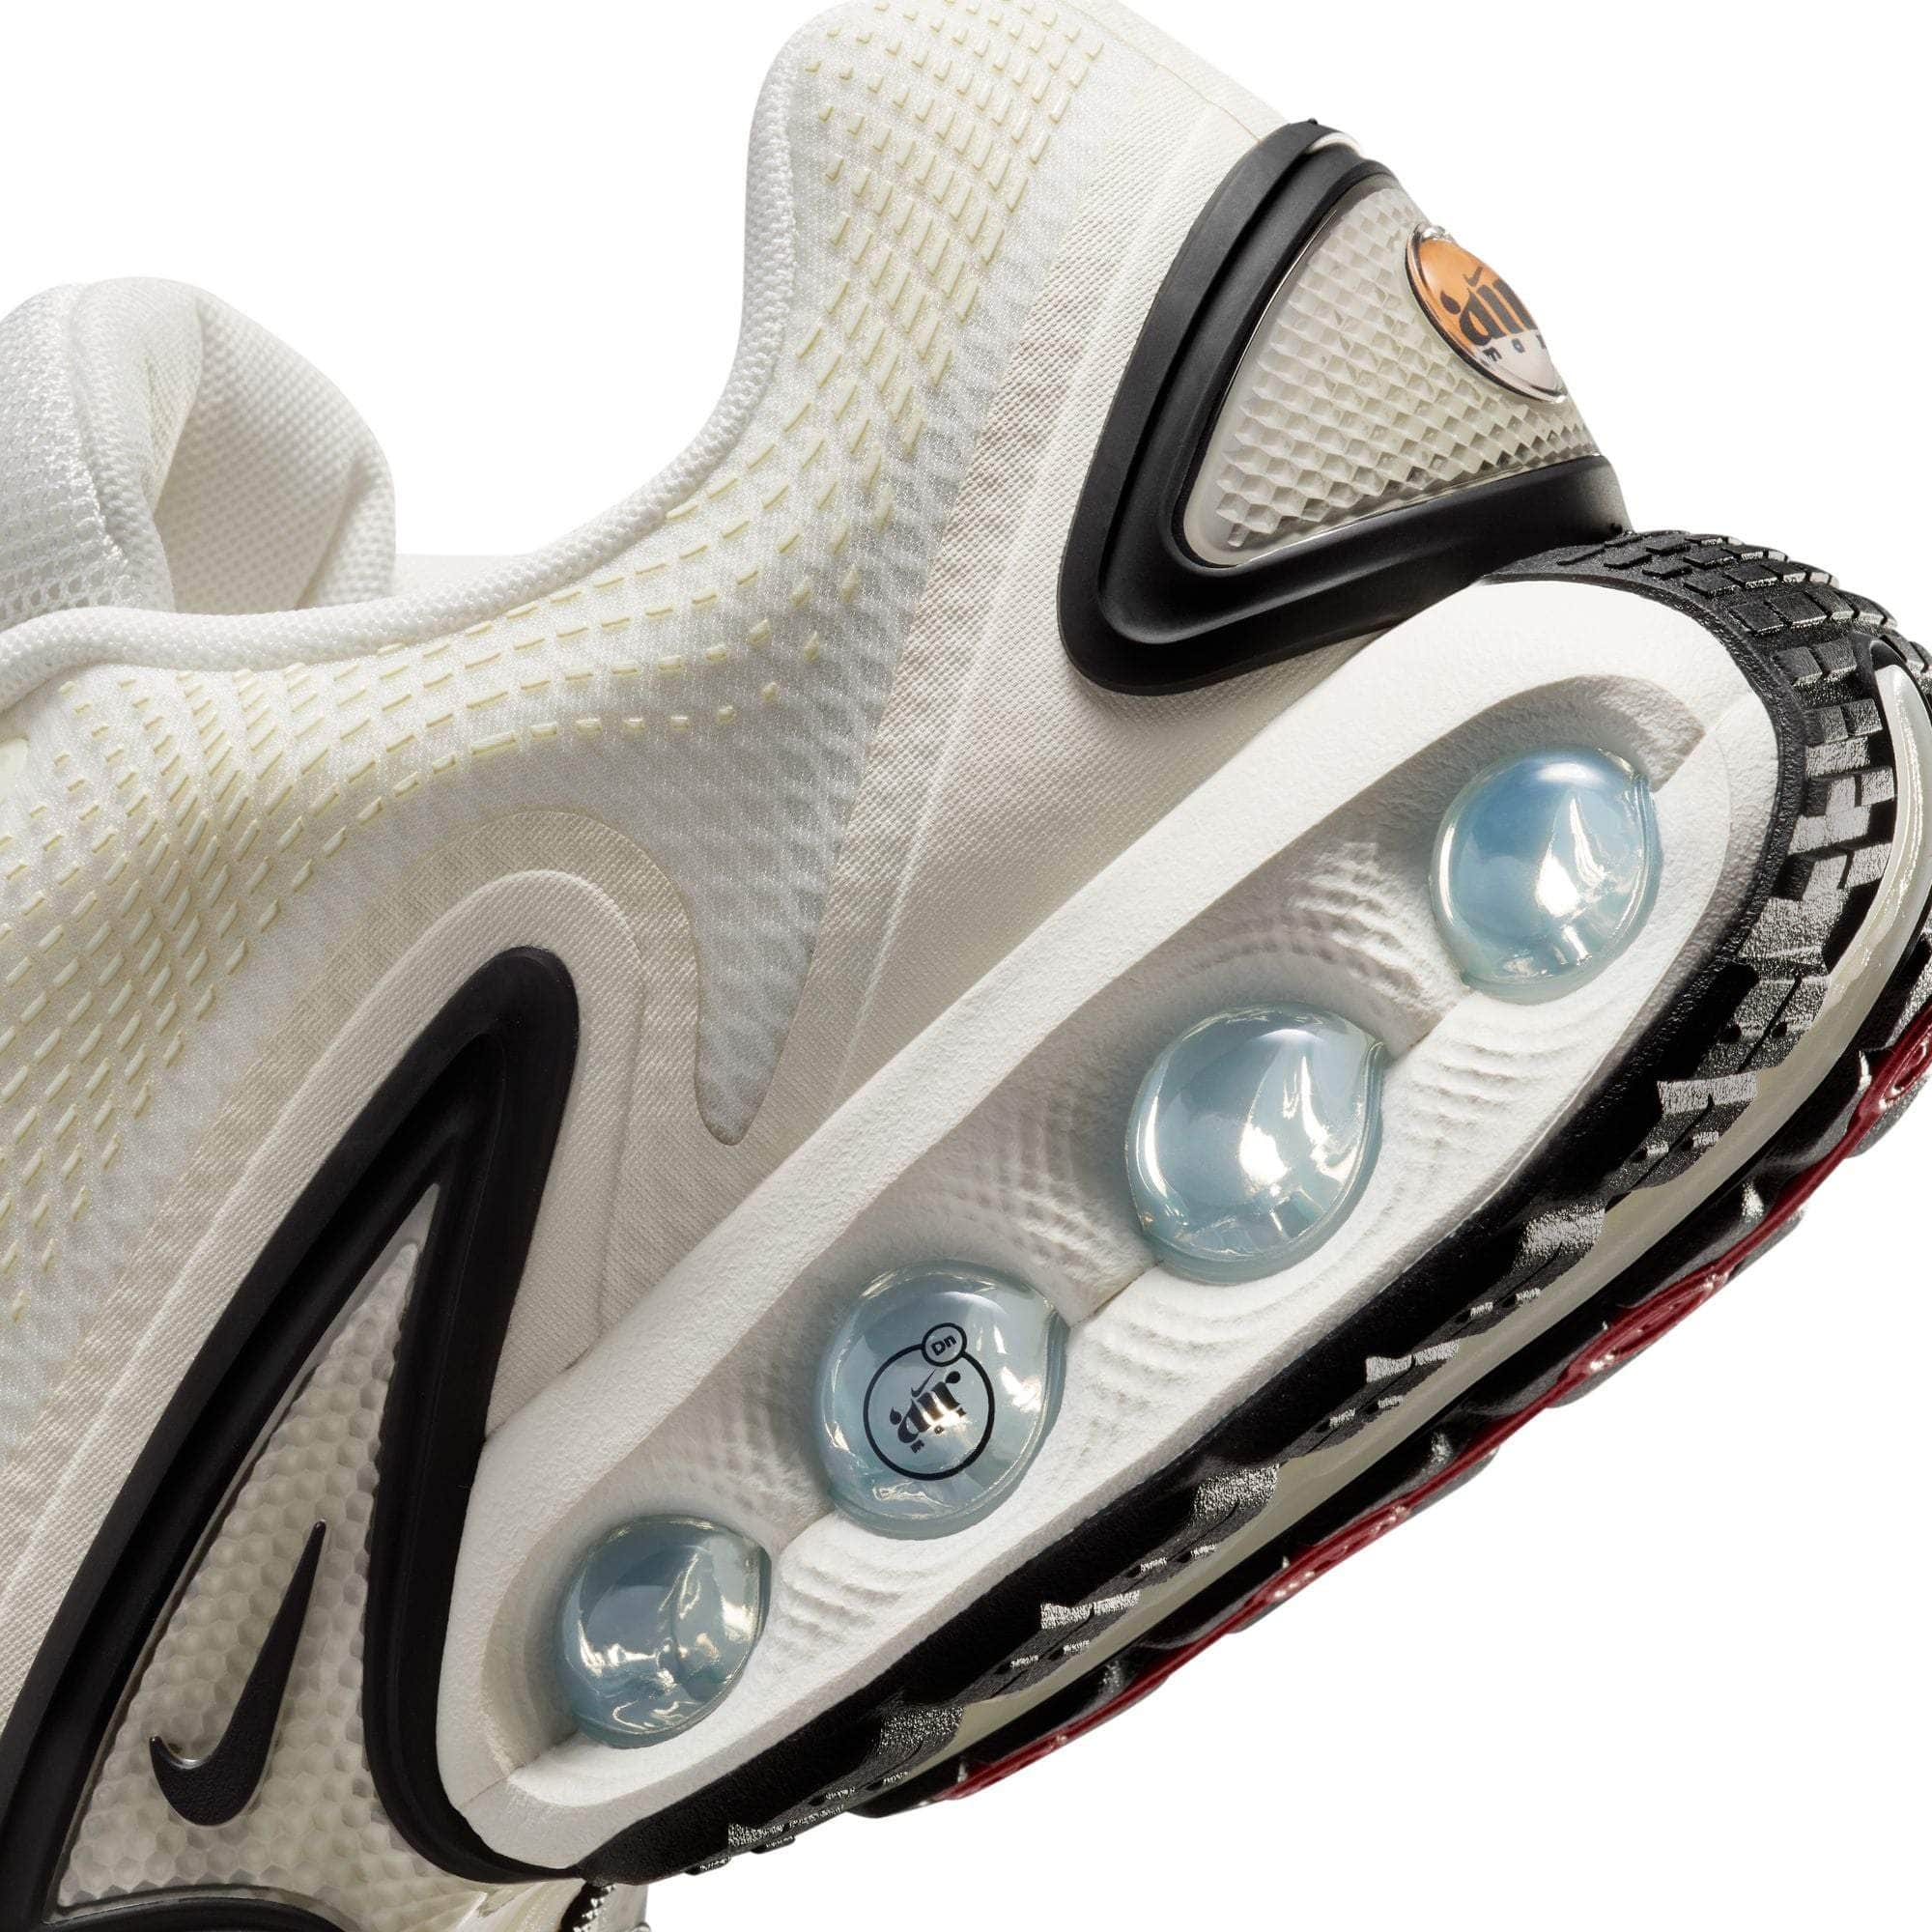 Nike Footwear Nike Air Max DN "Sail" - Men's